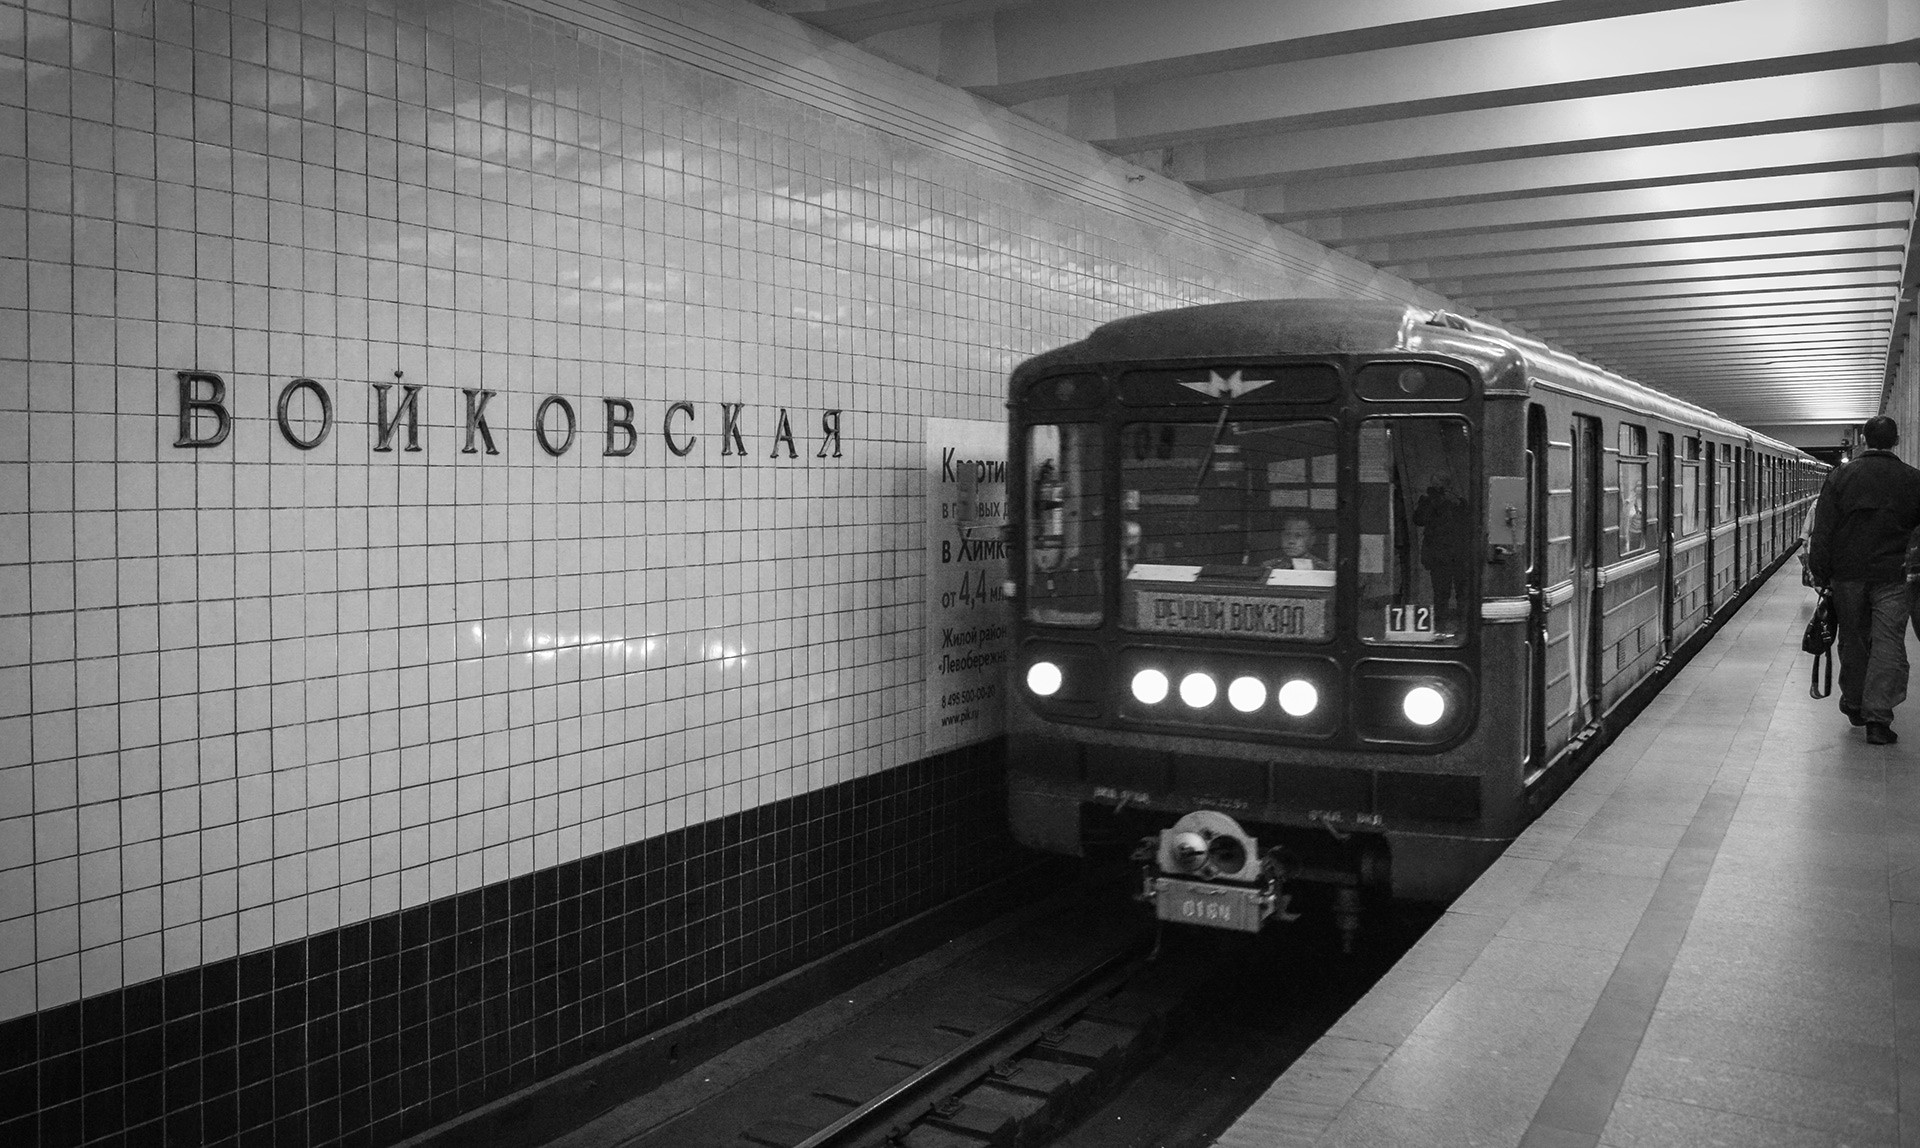 Station de métro Voïkovskaïa